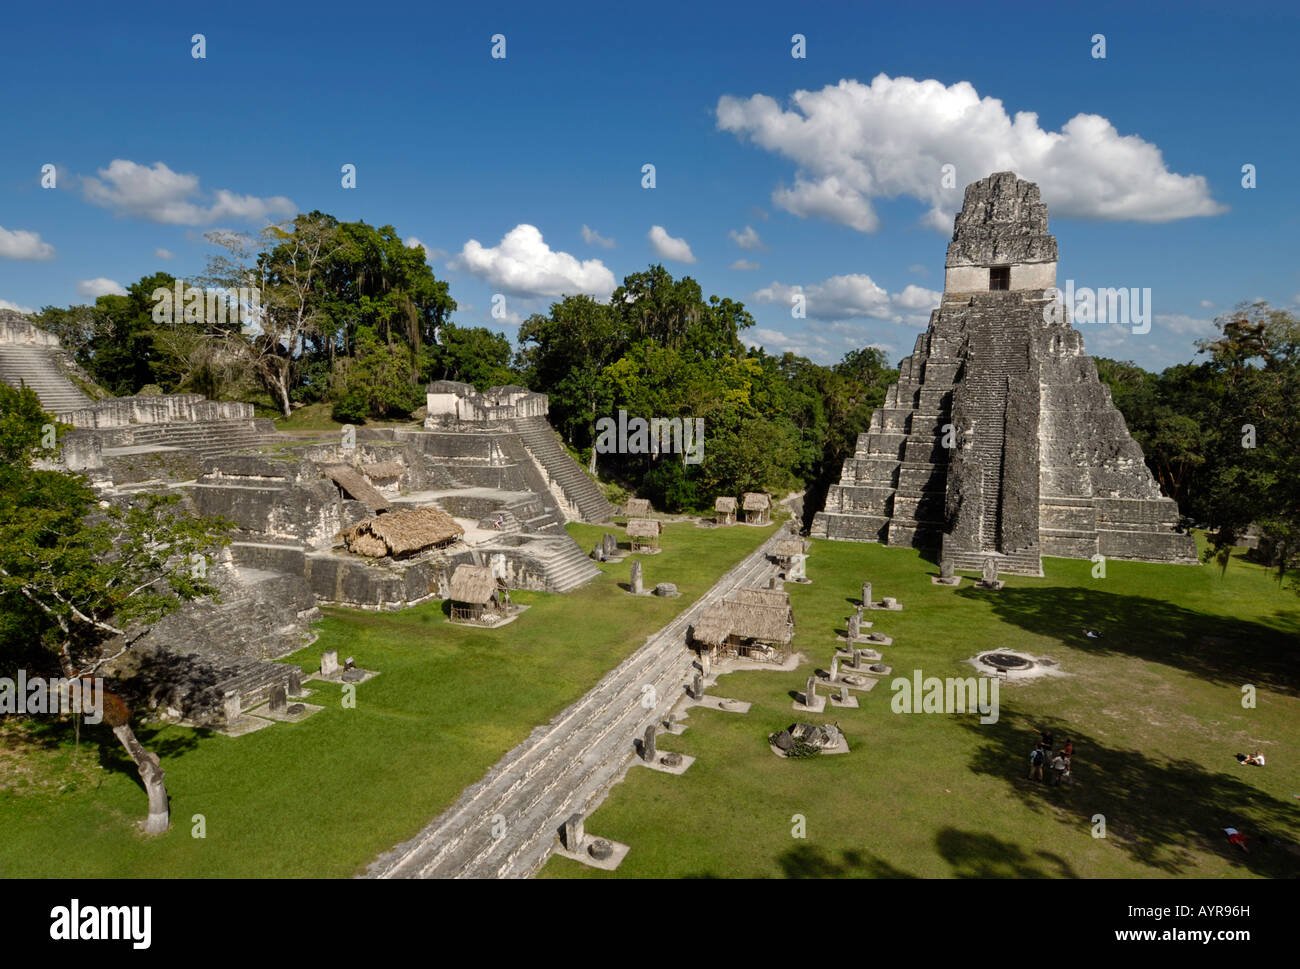 Tikal, Maya-Ruinen, Blick vom Tempel II in Richtung Tempel I, Tempel des riesigen Jaguar und der Gran Plaza, Halbinsel Yucatán Gua Stockfoto